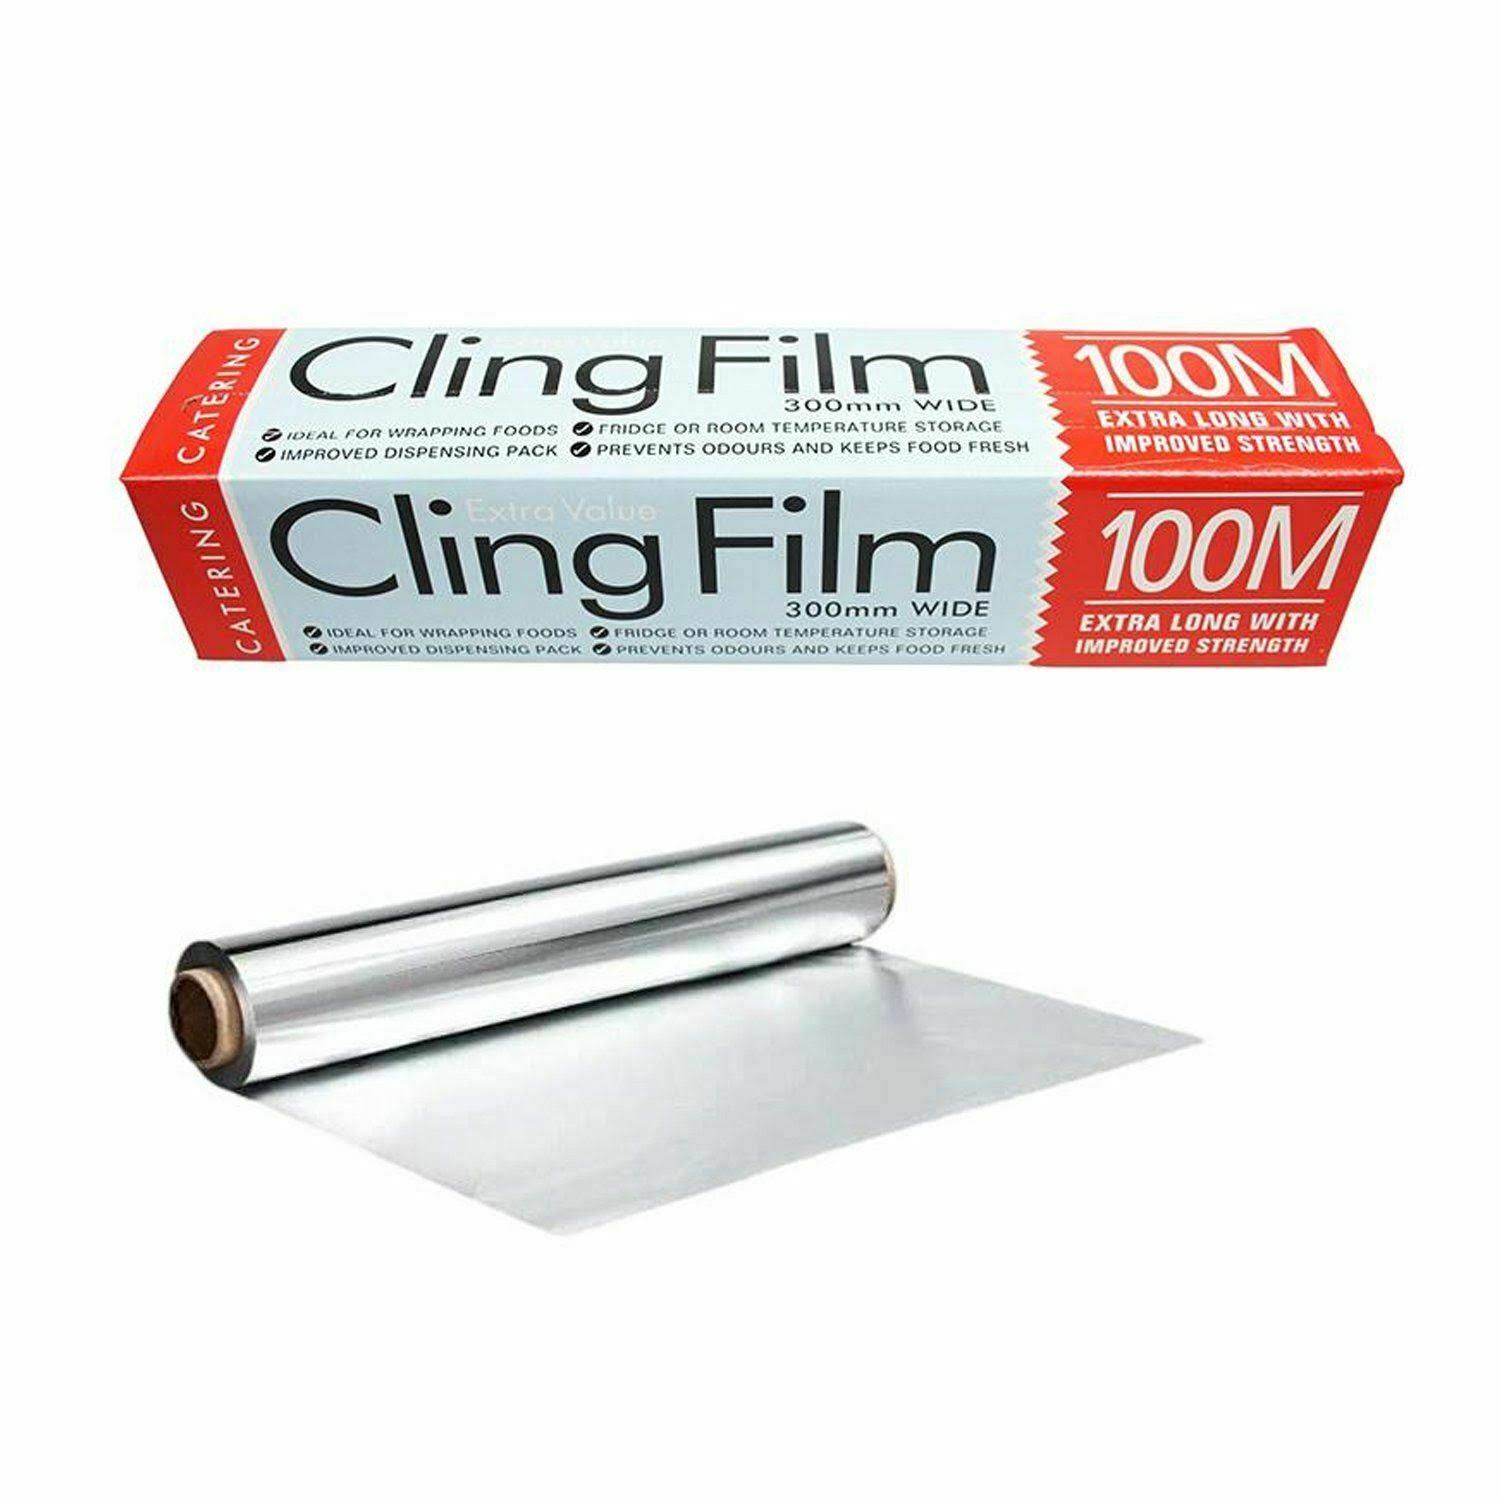 Essential Housewares Cling Film 100m Long 300mm Wide